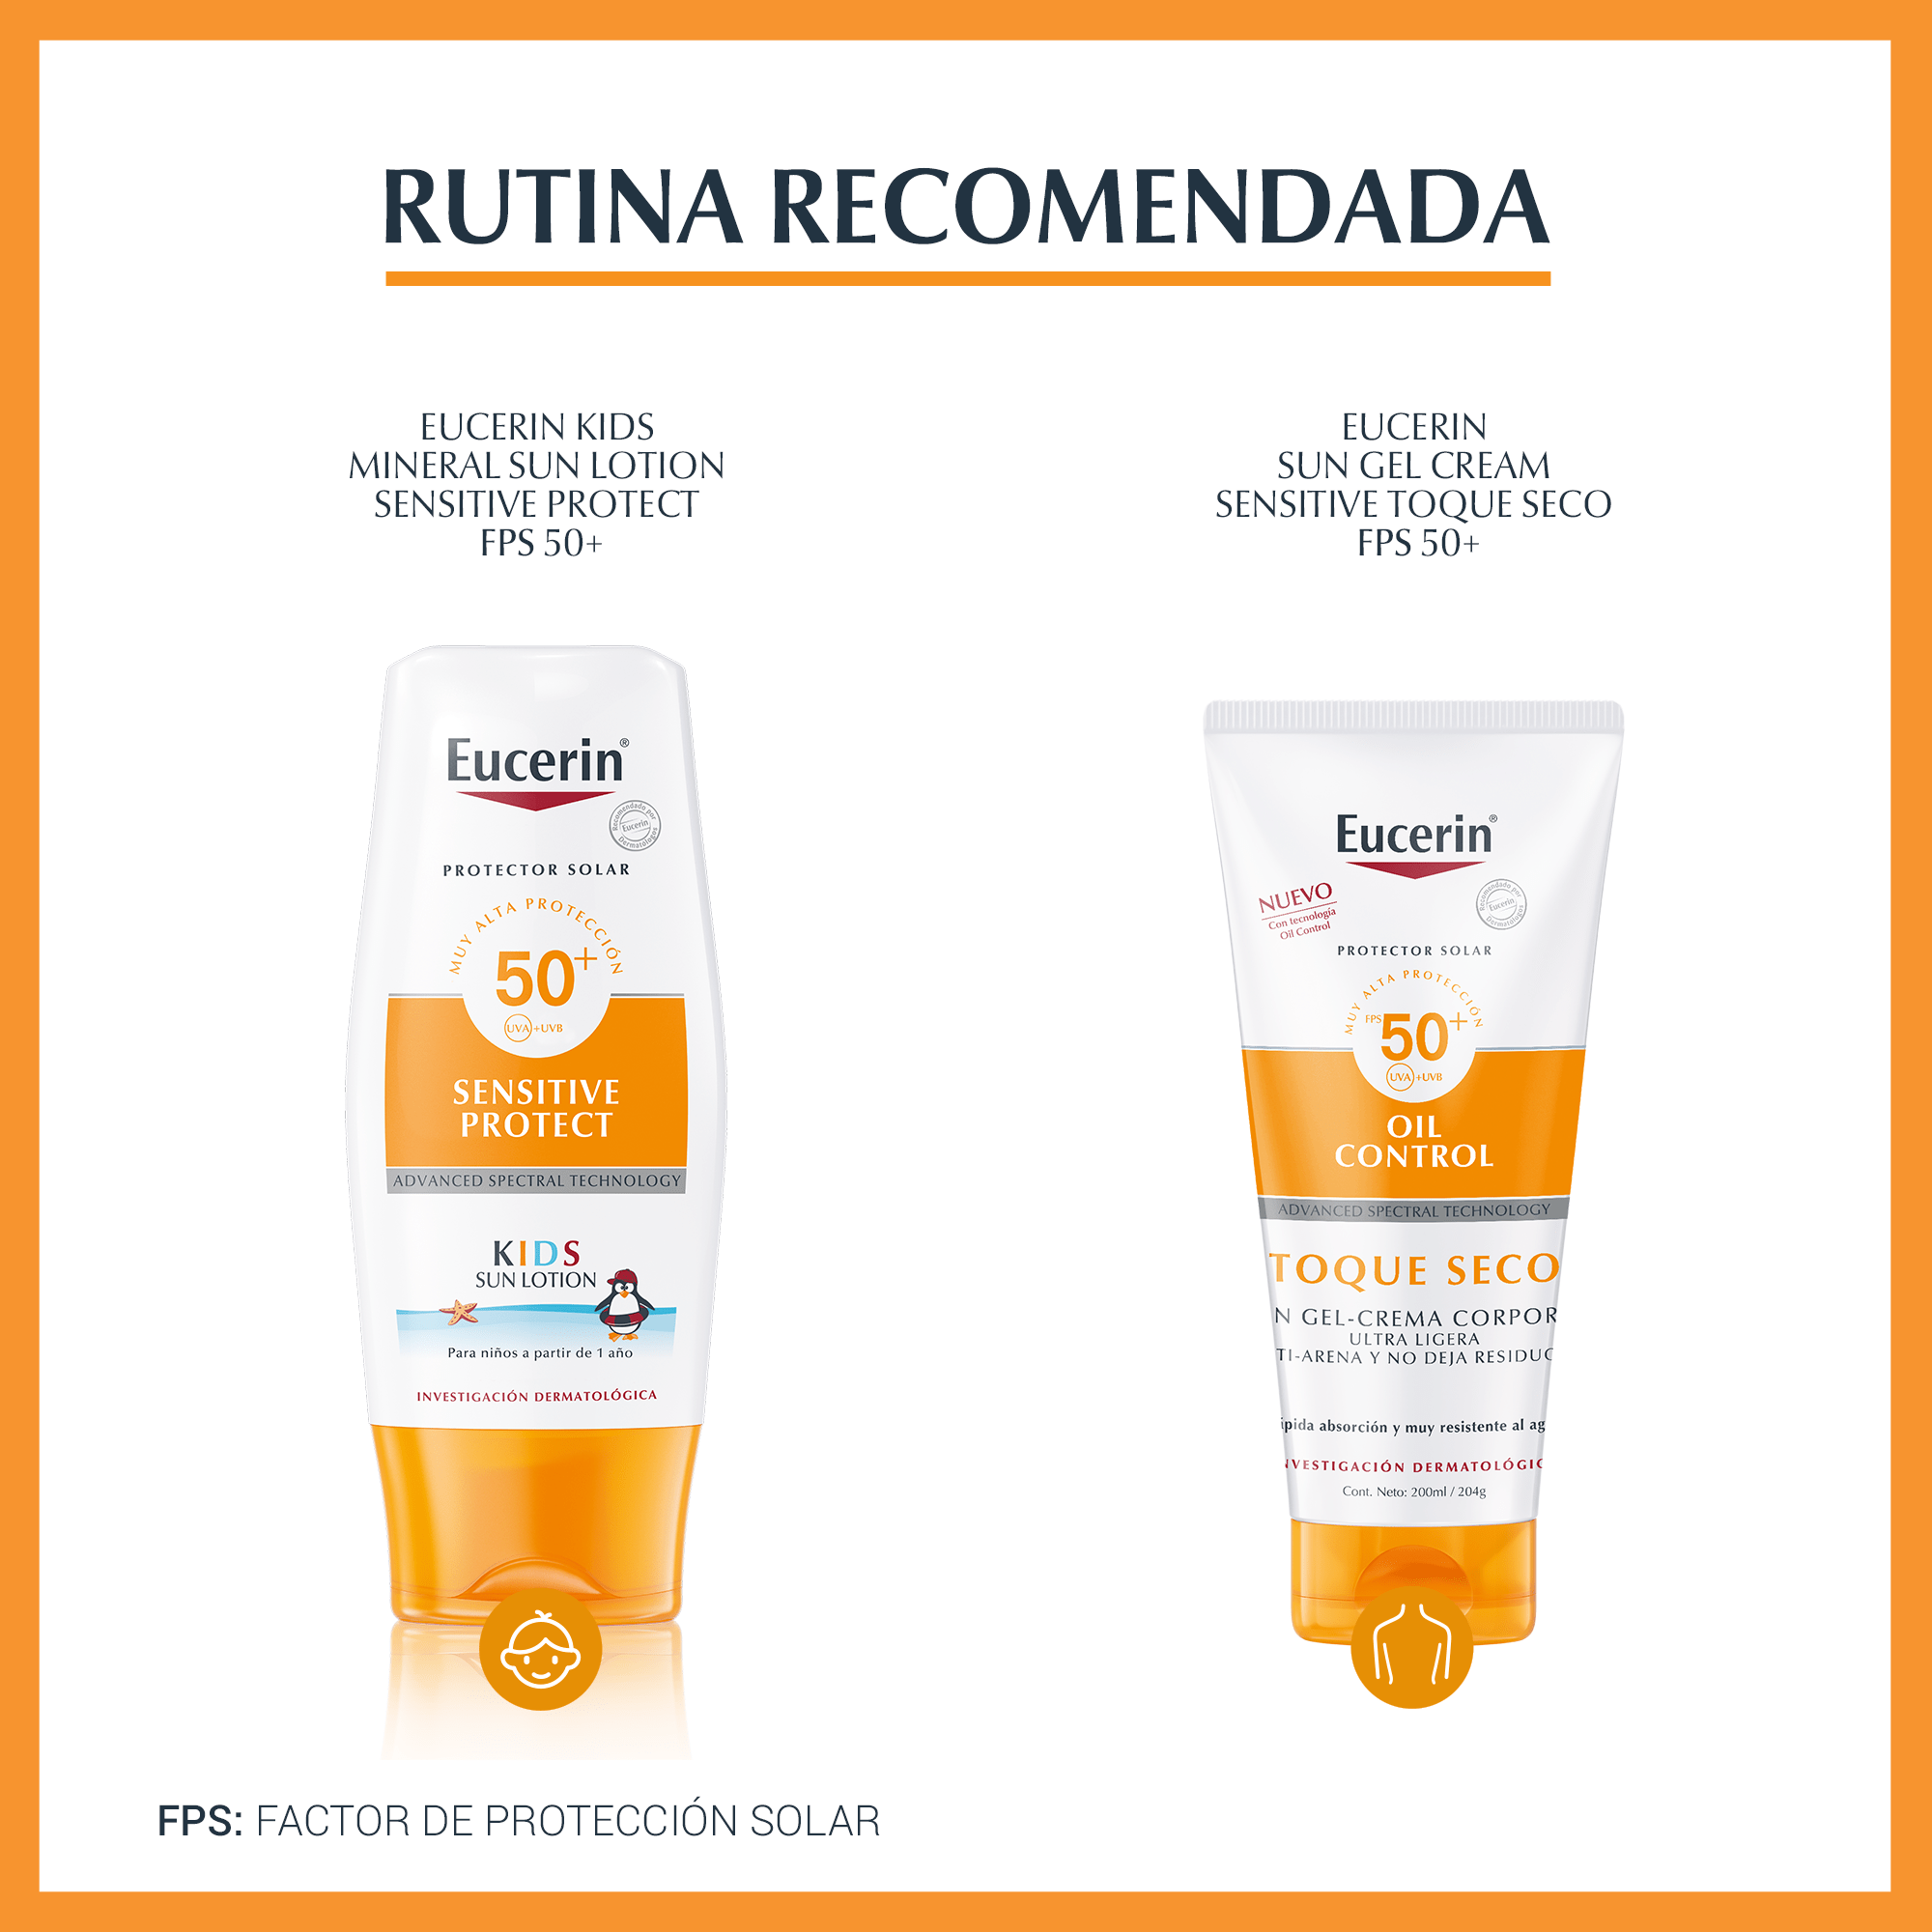 Rutina Recomendada + Sun facial Photoaging Control